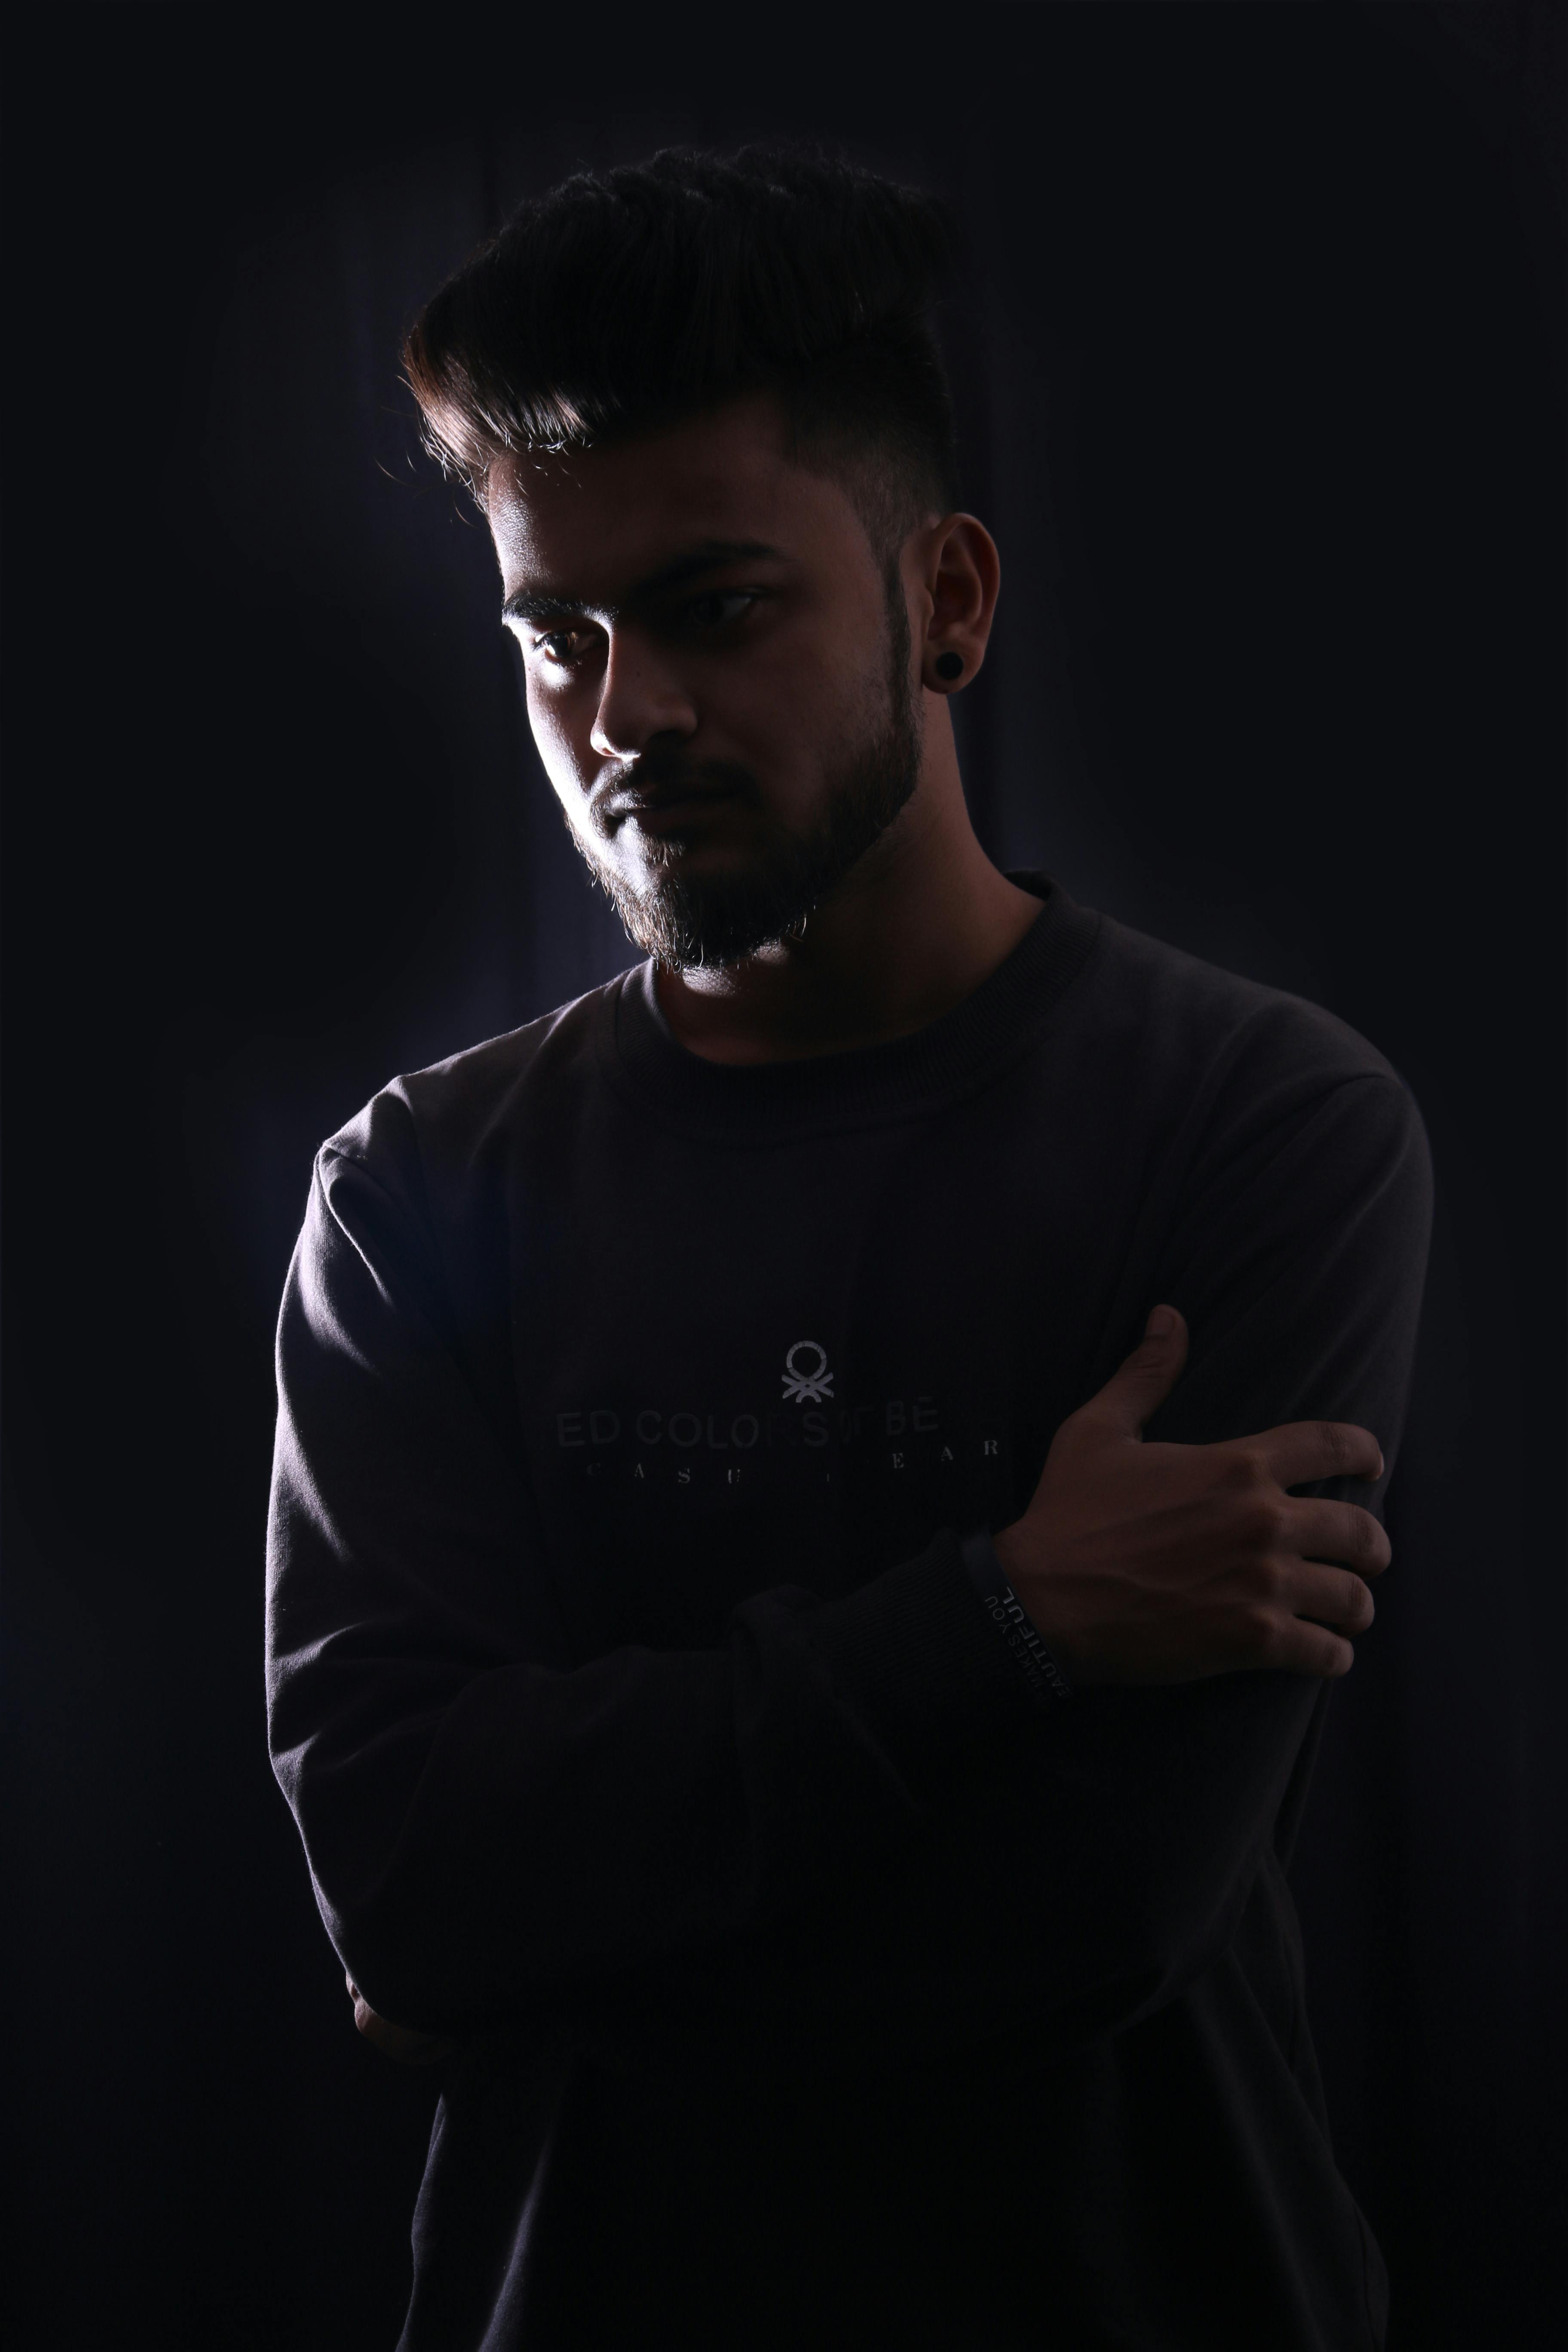 Photography of Man in Black Sweatshirt · Free Stock Photo